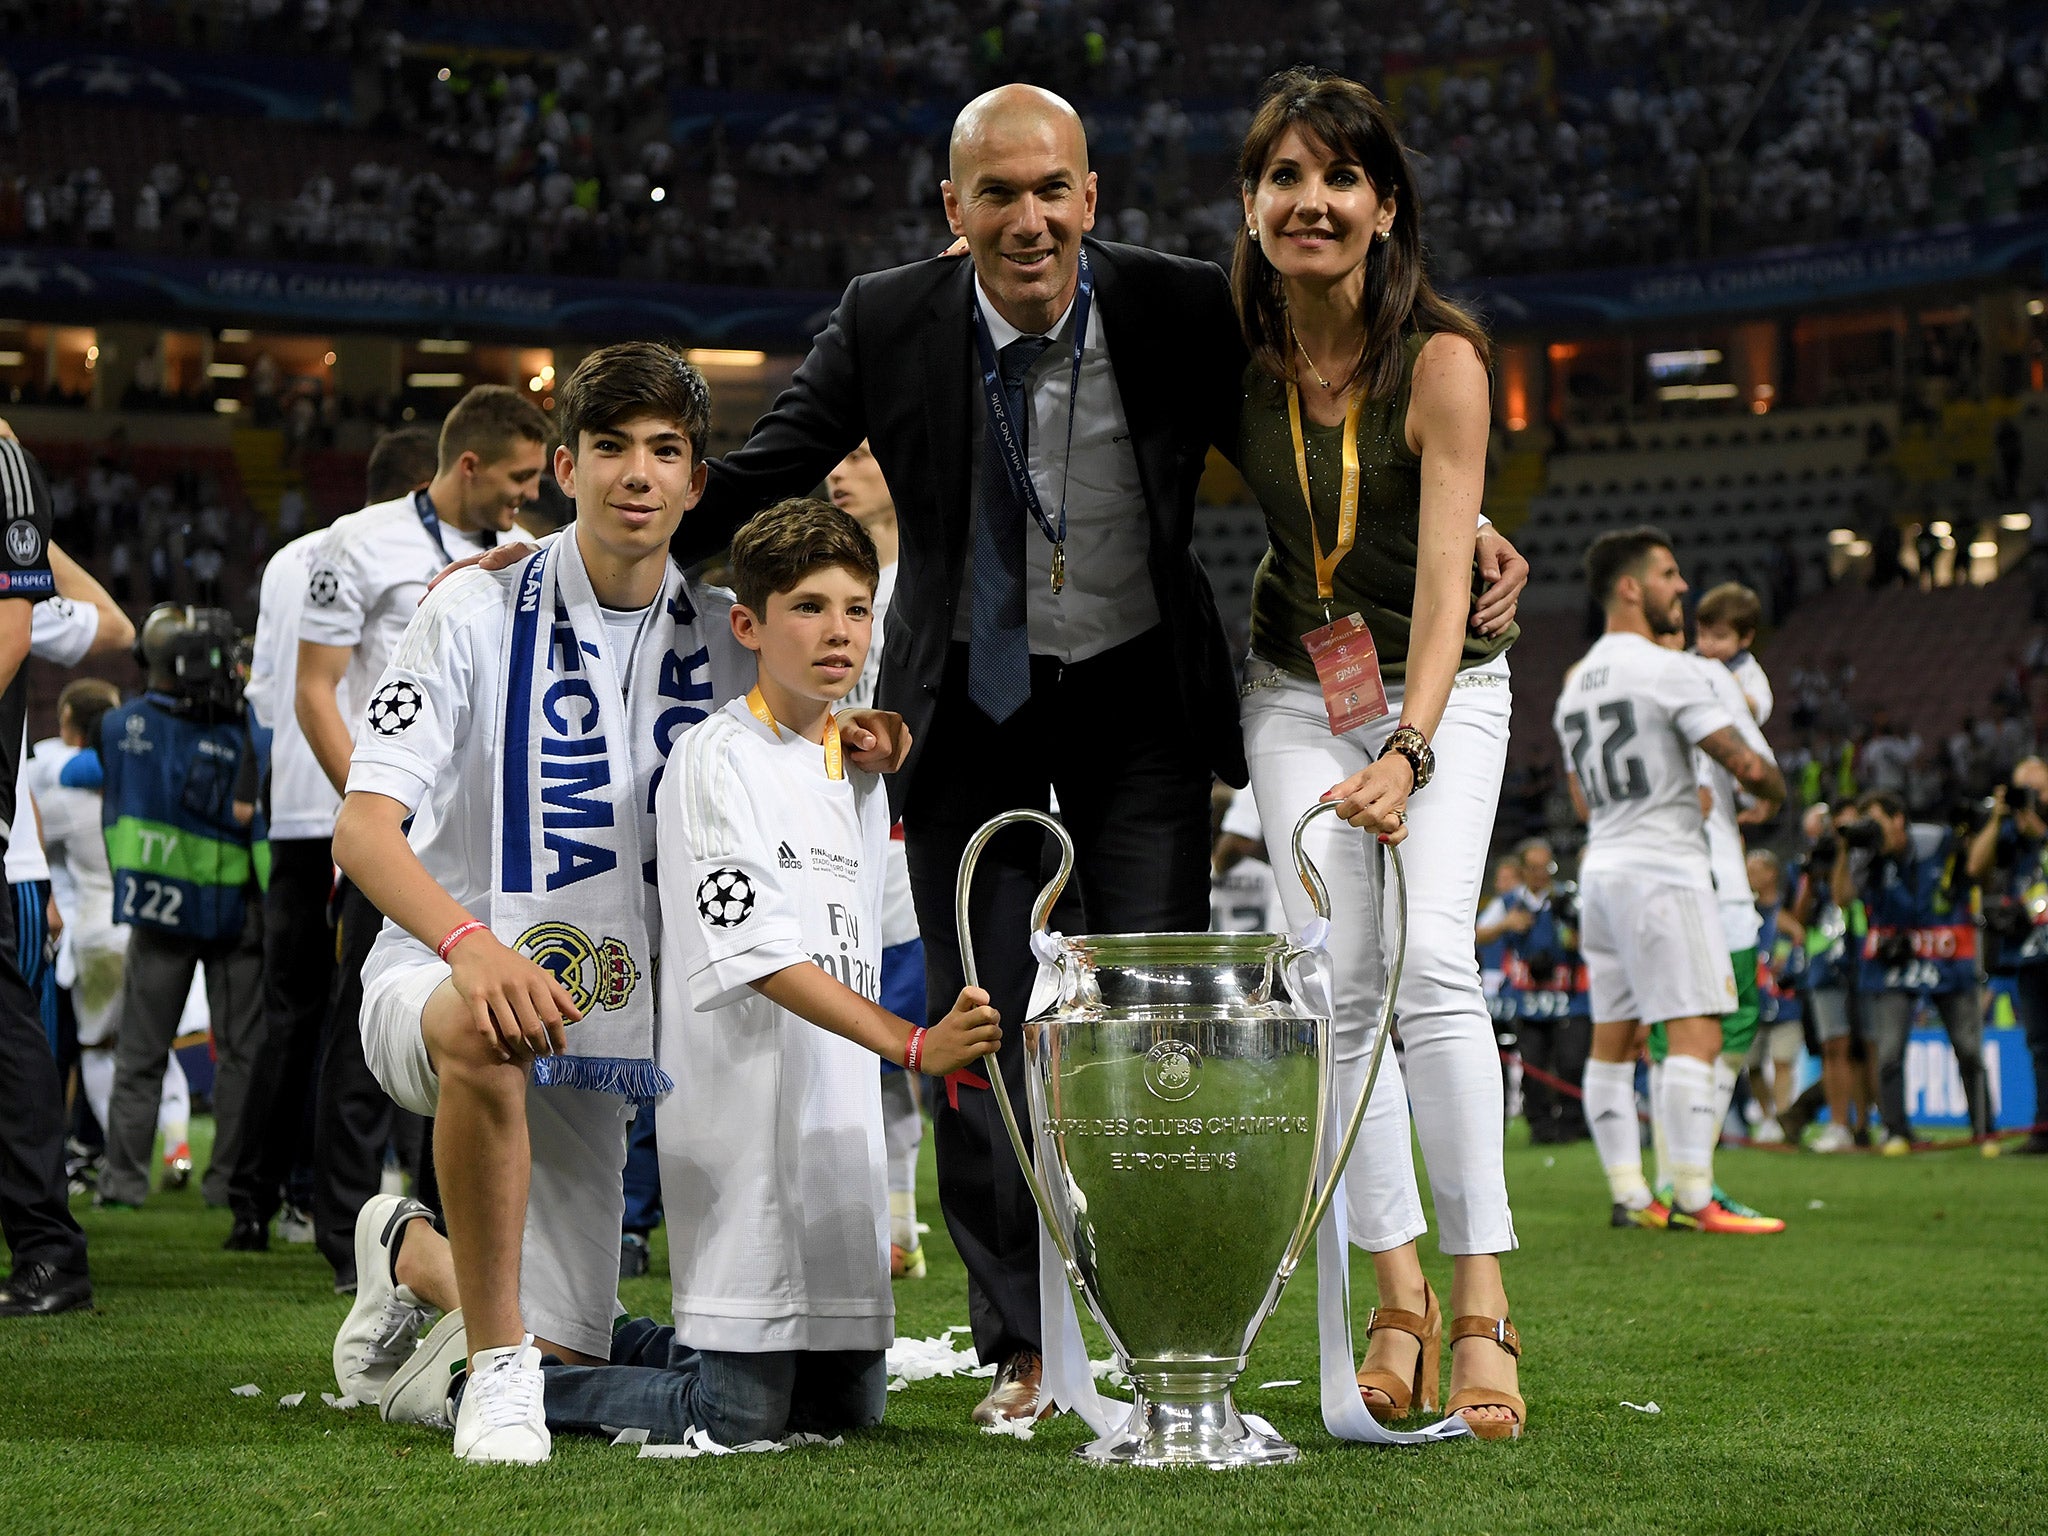 Cristiano Ronaldo will 'arrive at the Champions League final' fit, says  Real Madrid head coach Zinedine Zidane